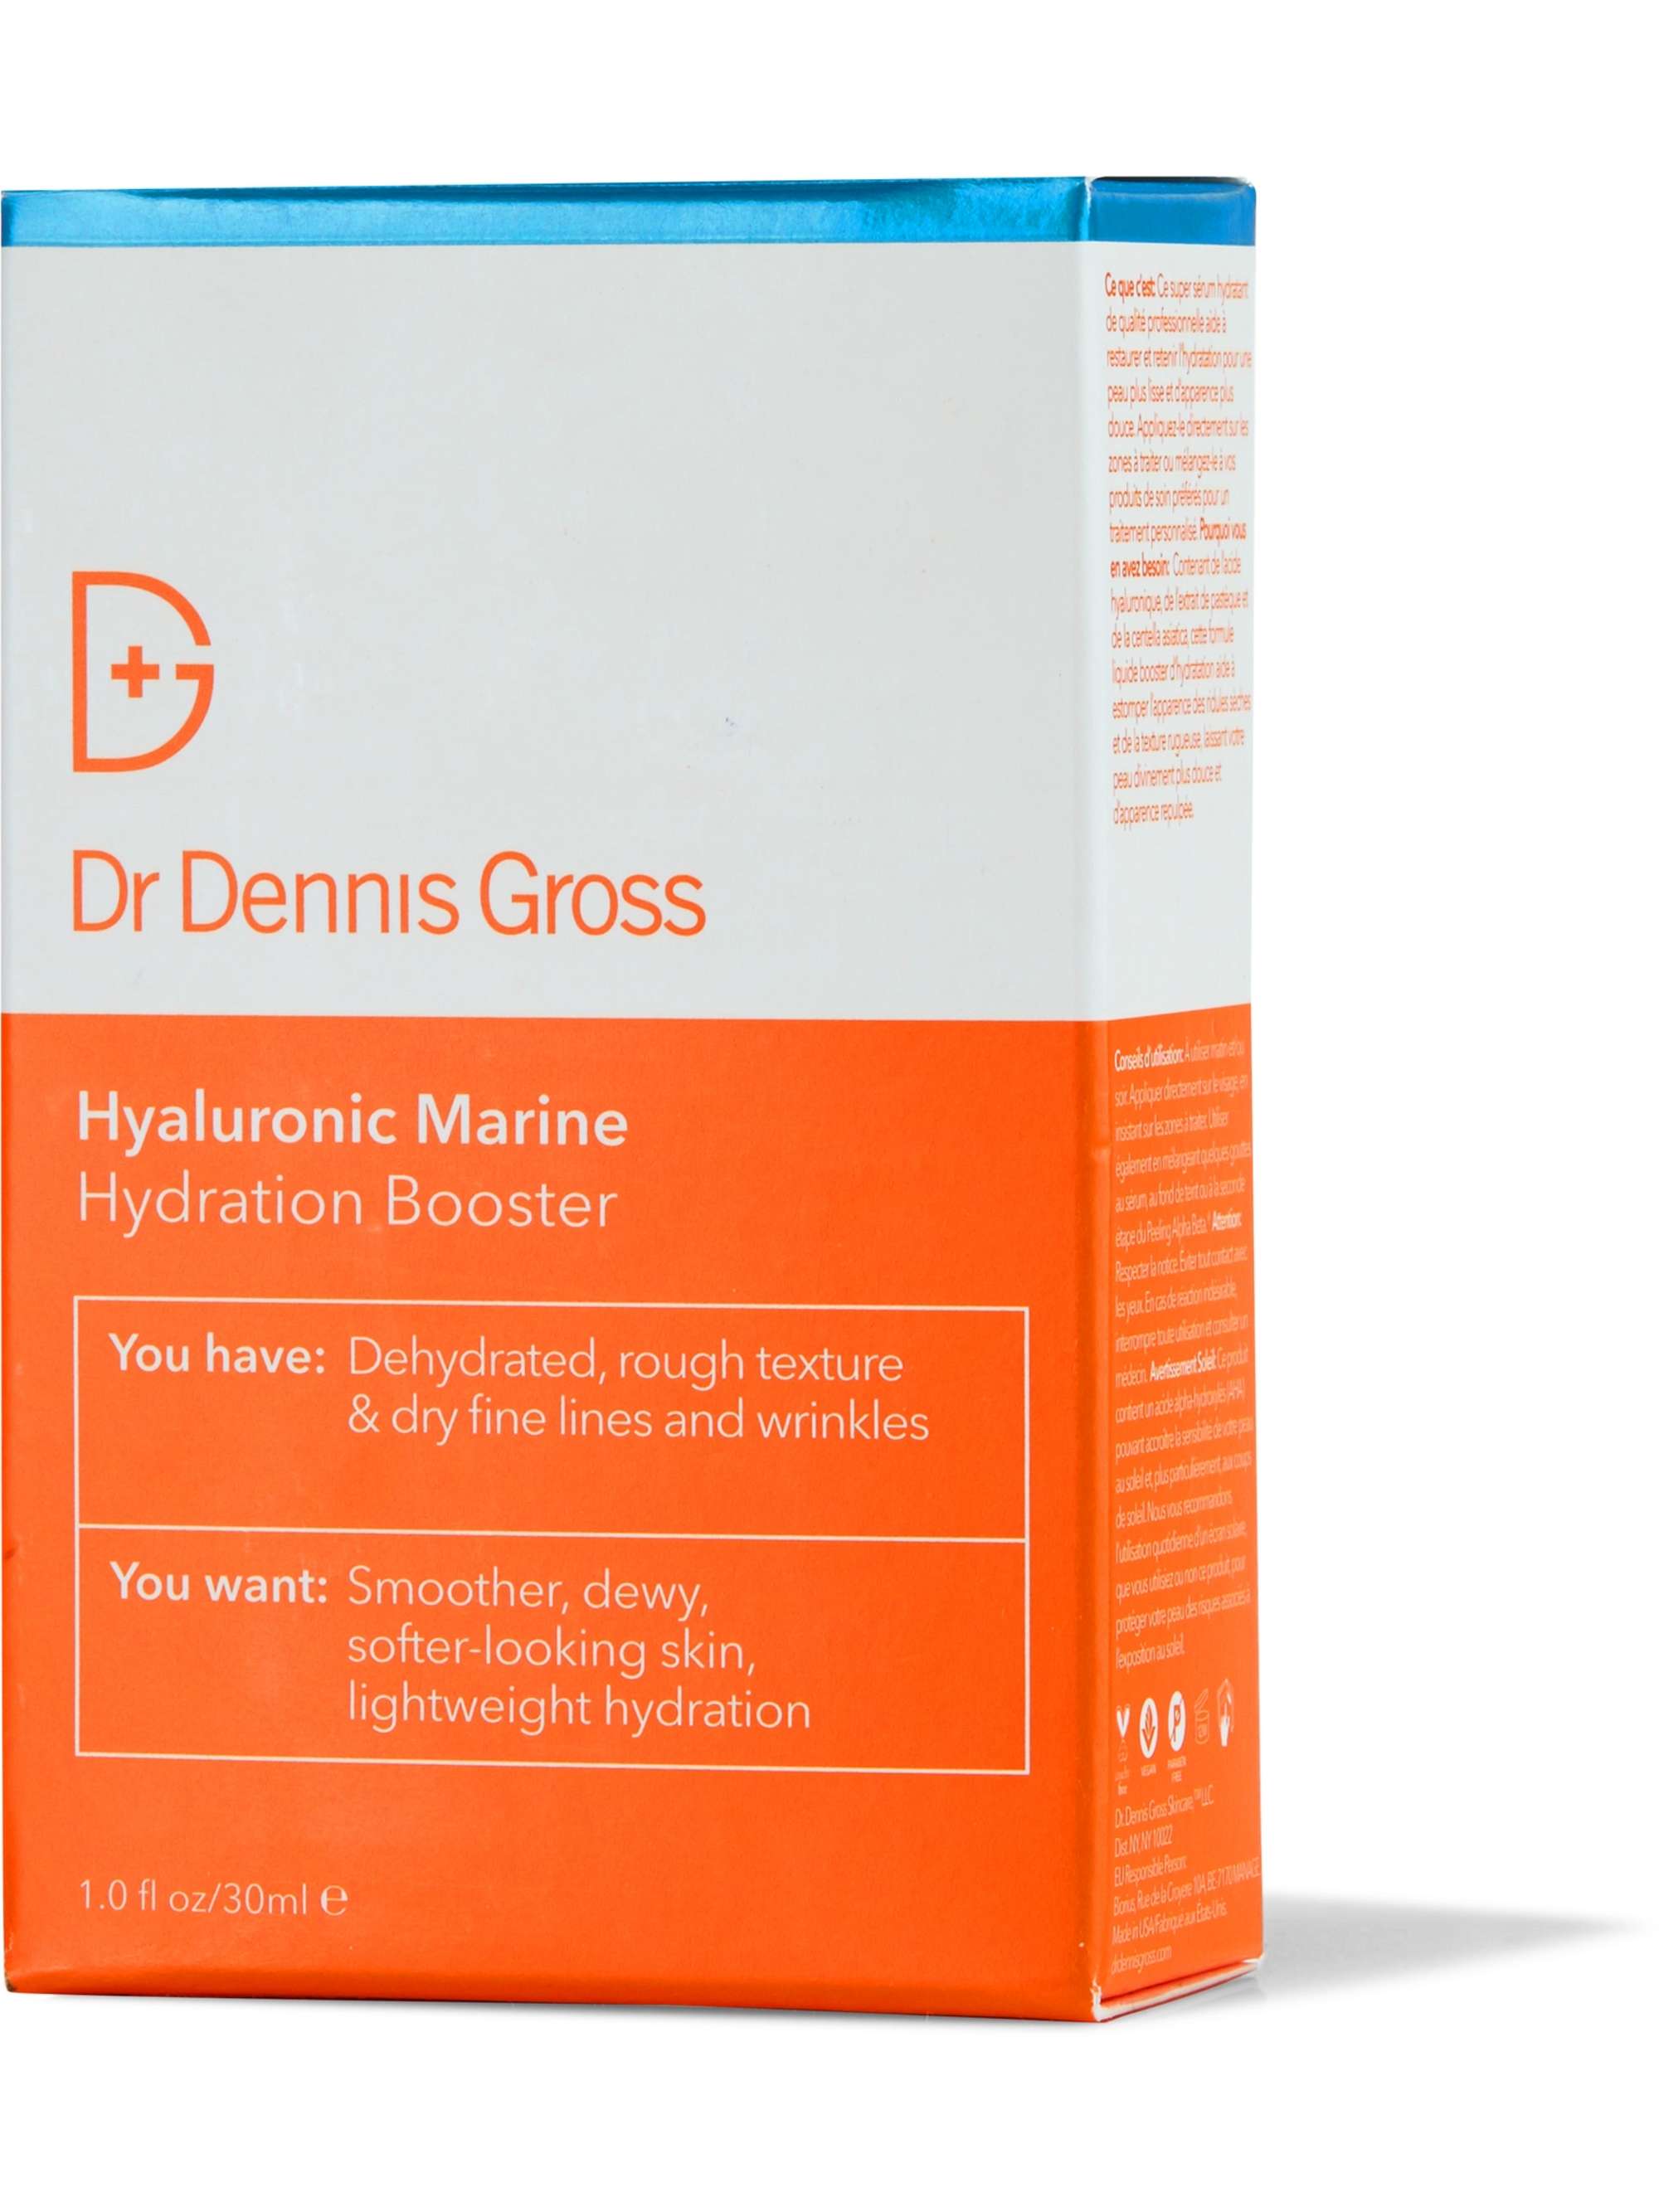 DR. DENNIS GROSS SKINCARE Hyaluronic Marine Hydration Booster, 30ml